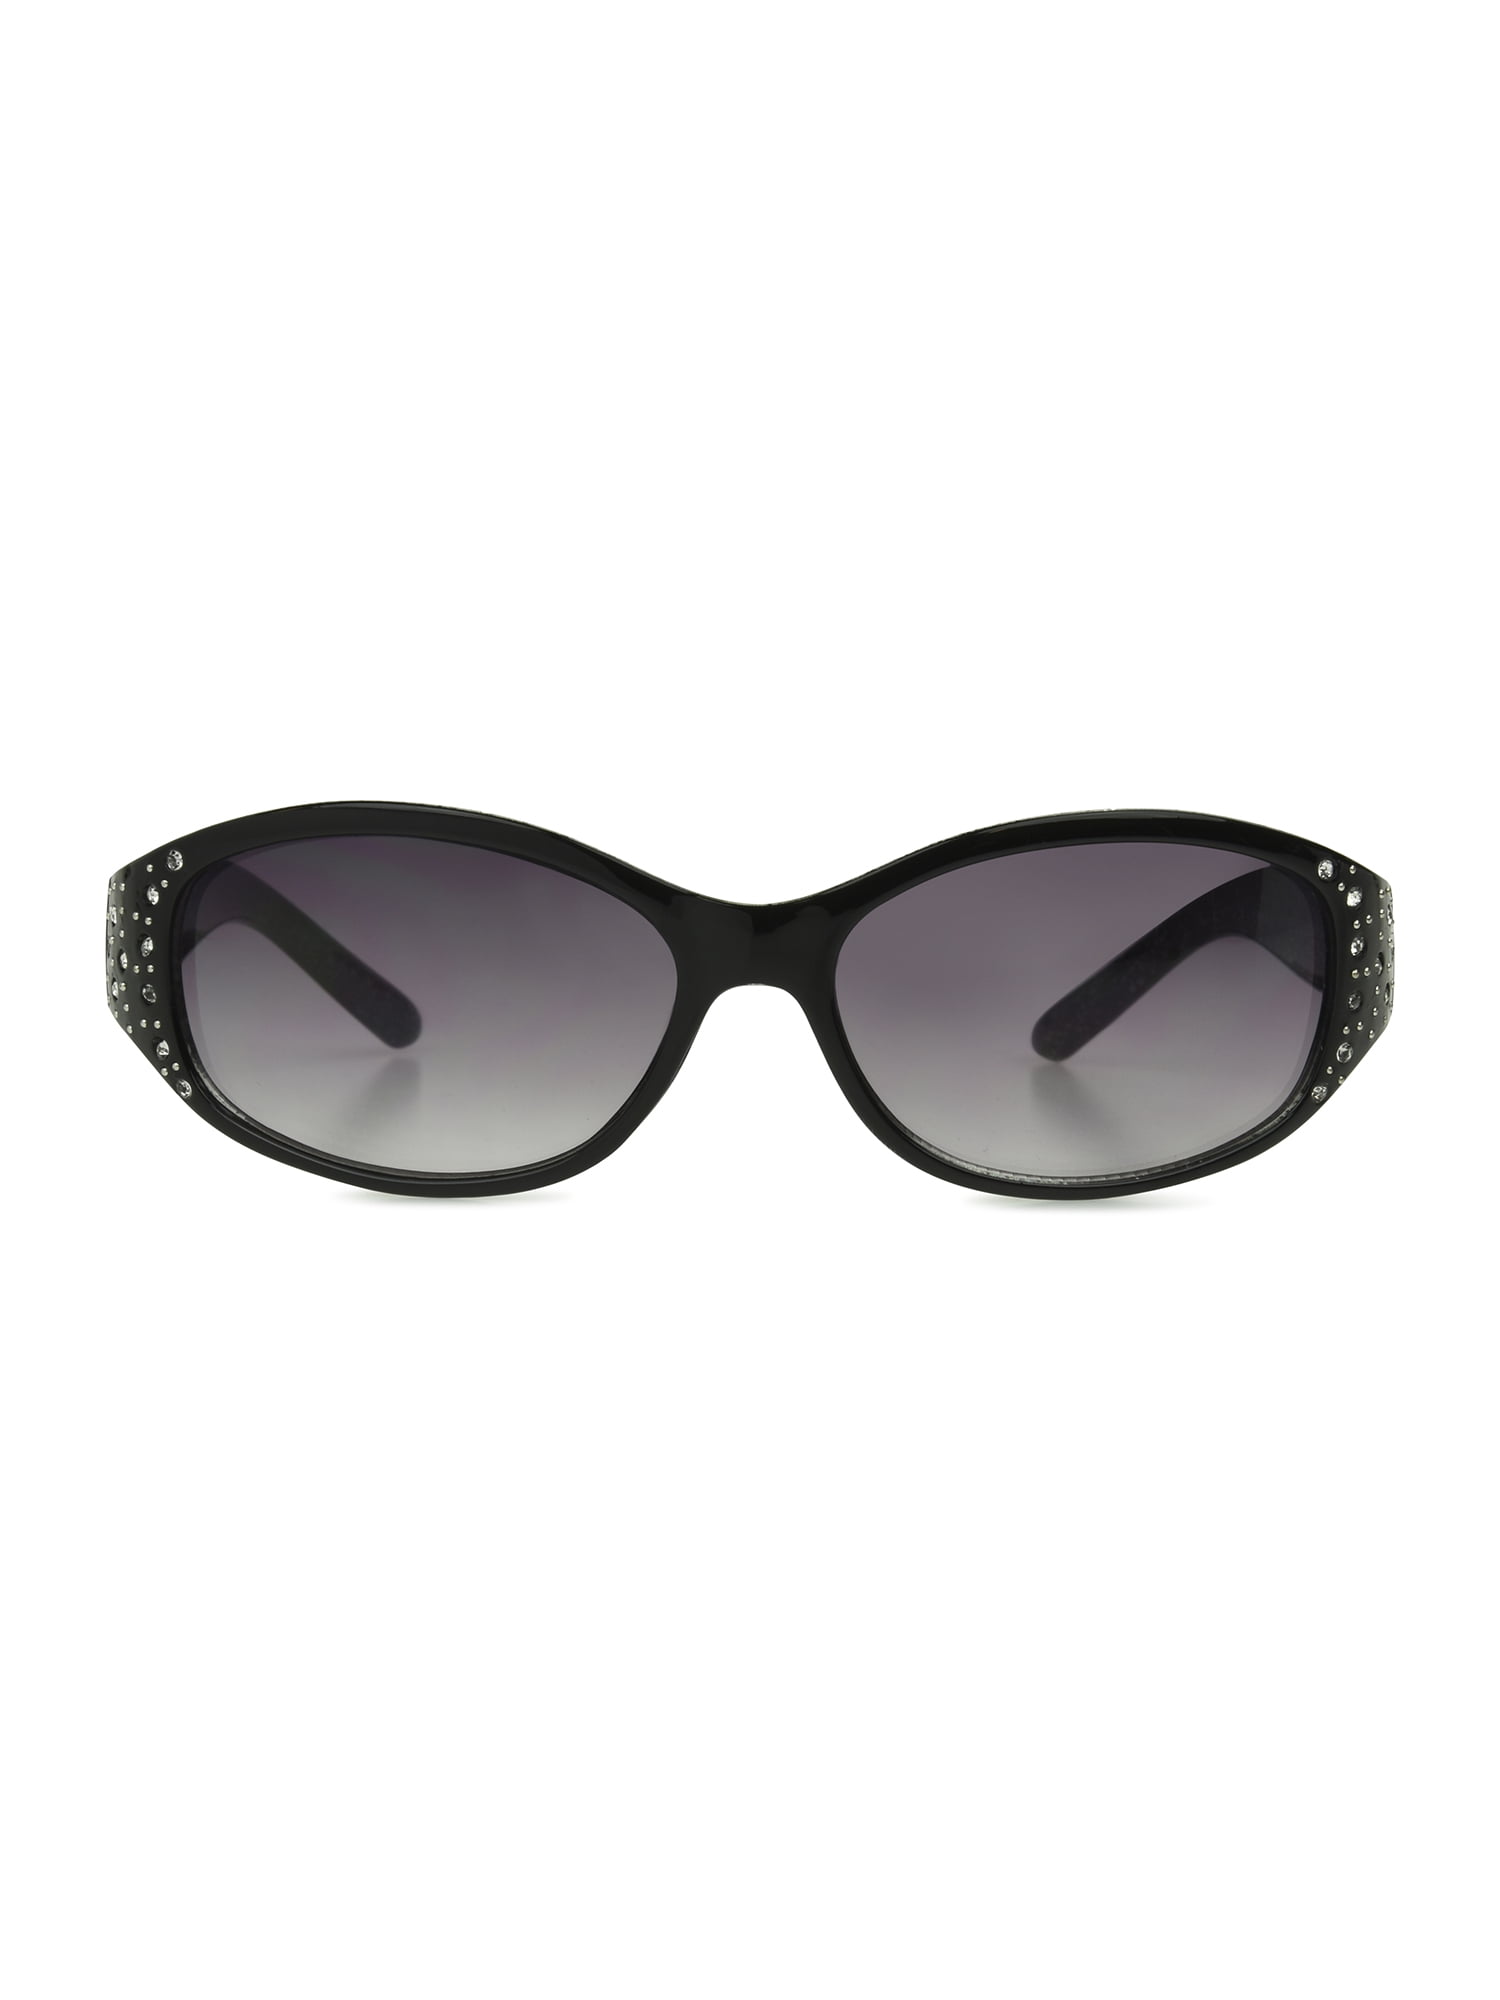 Foster Grant Fashion Mode Glitter Black Silver V Rhinestones 100% UV Sunglasses 